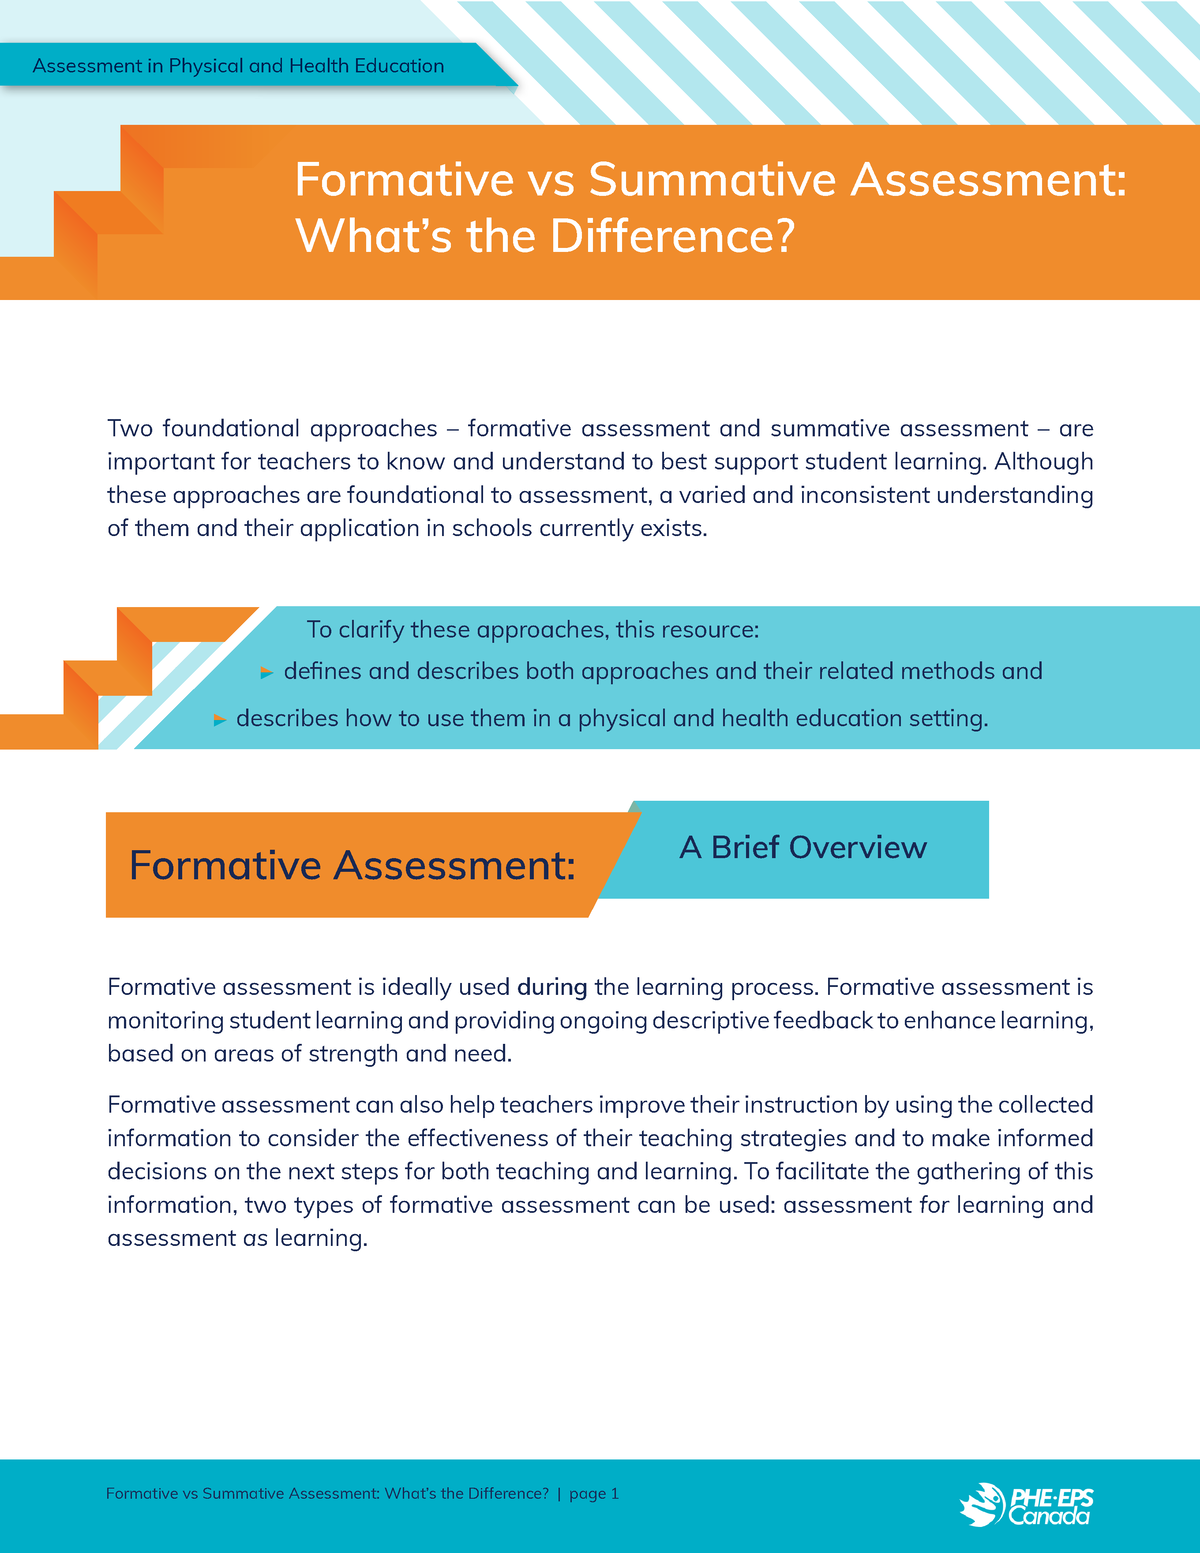 Formative Vs Summative Assessment En Formative Vs Summative Assessment Whats The Difference 4610